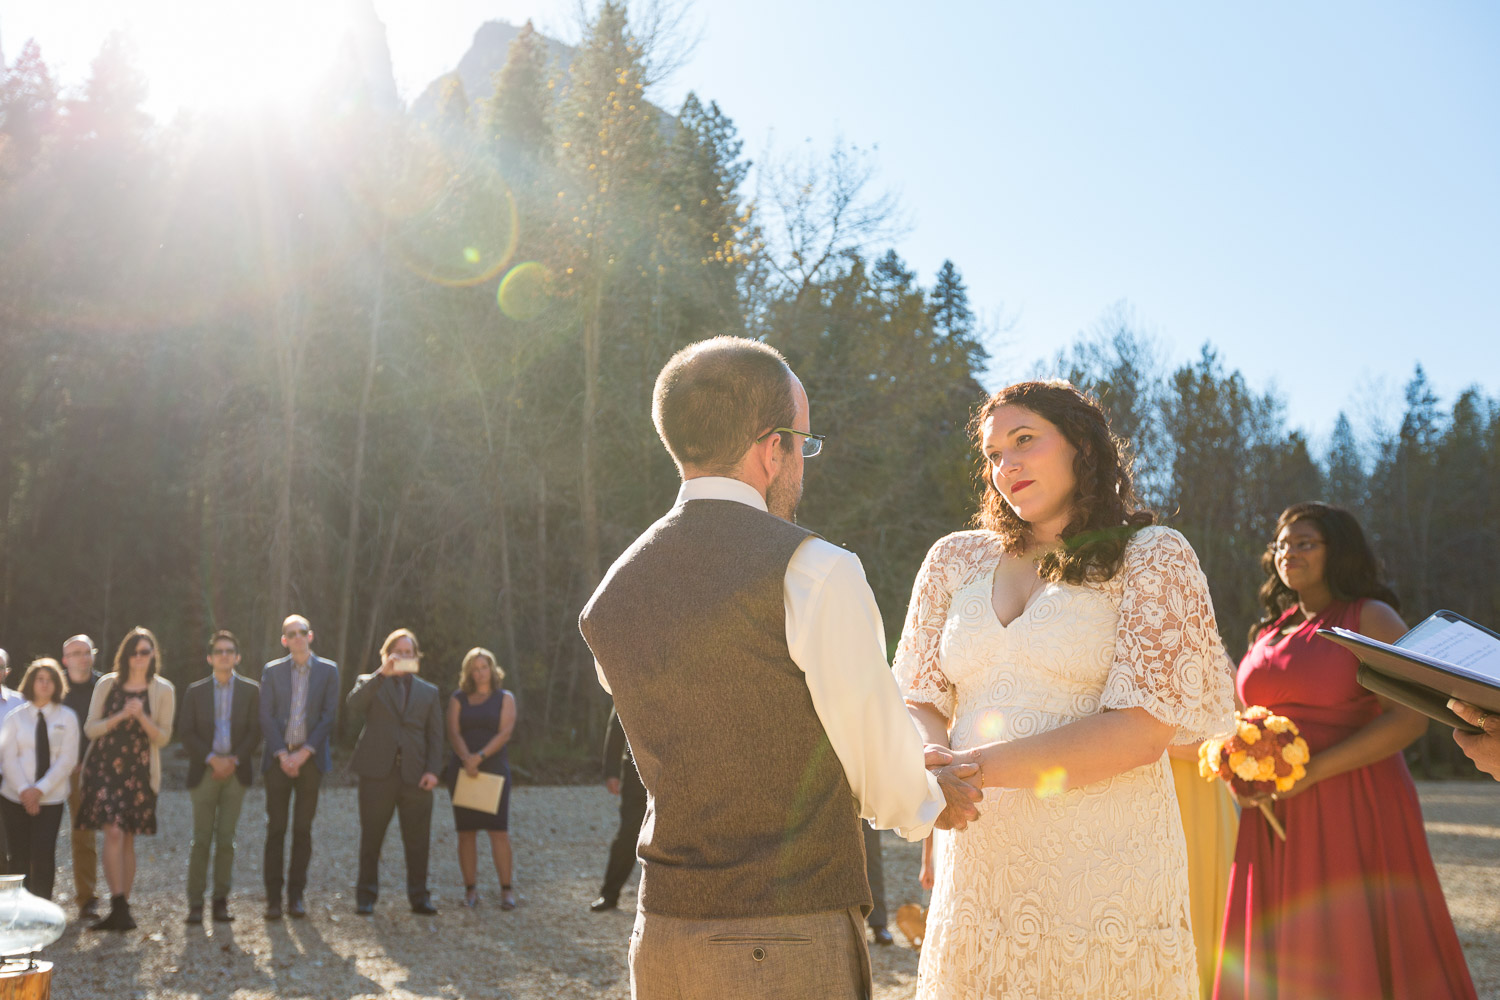 Cathedral beach Yosemite wedding ceremony